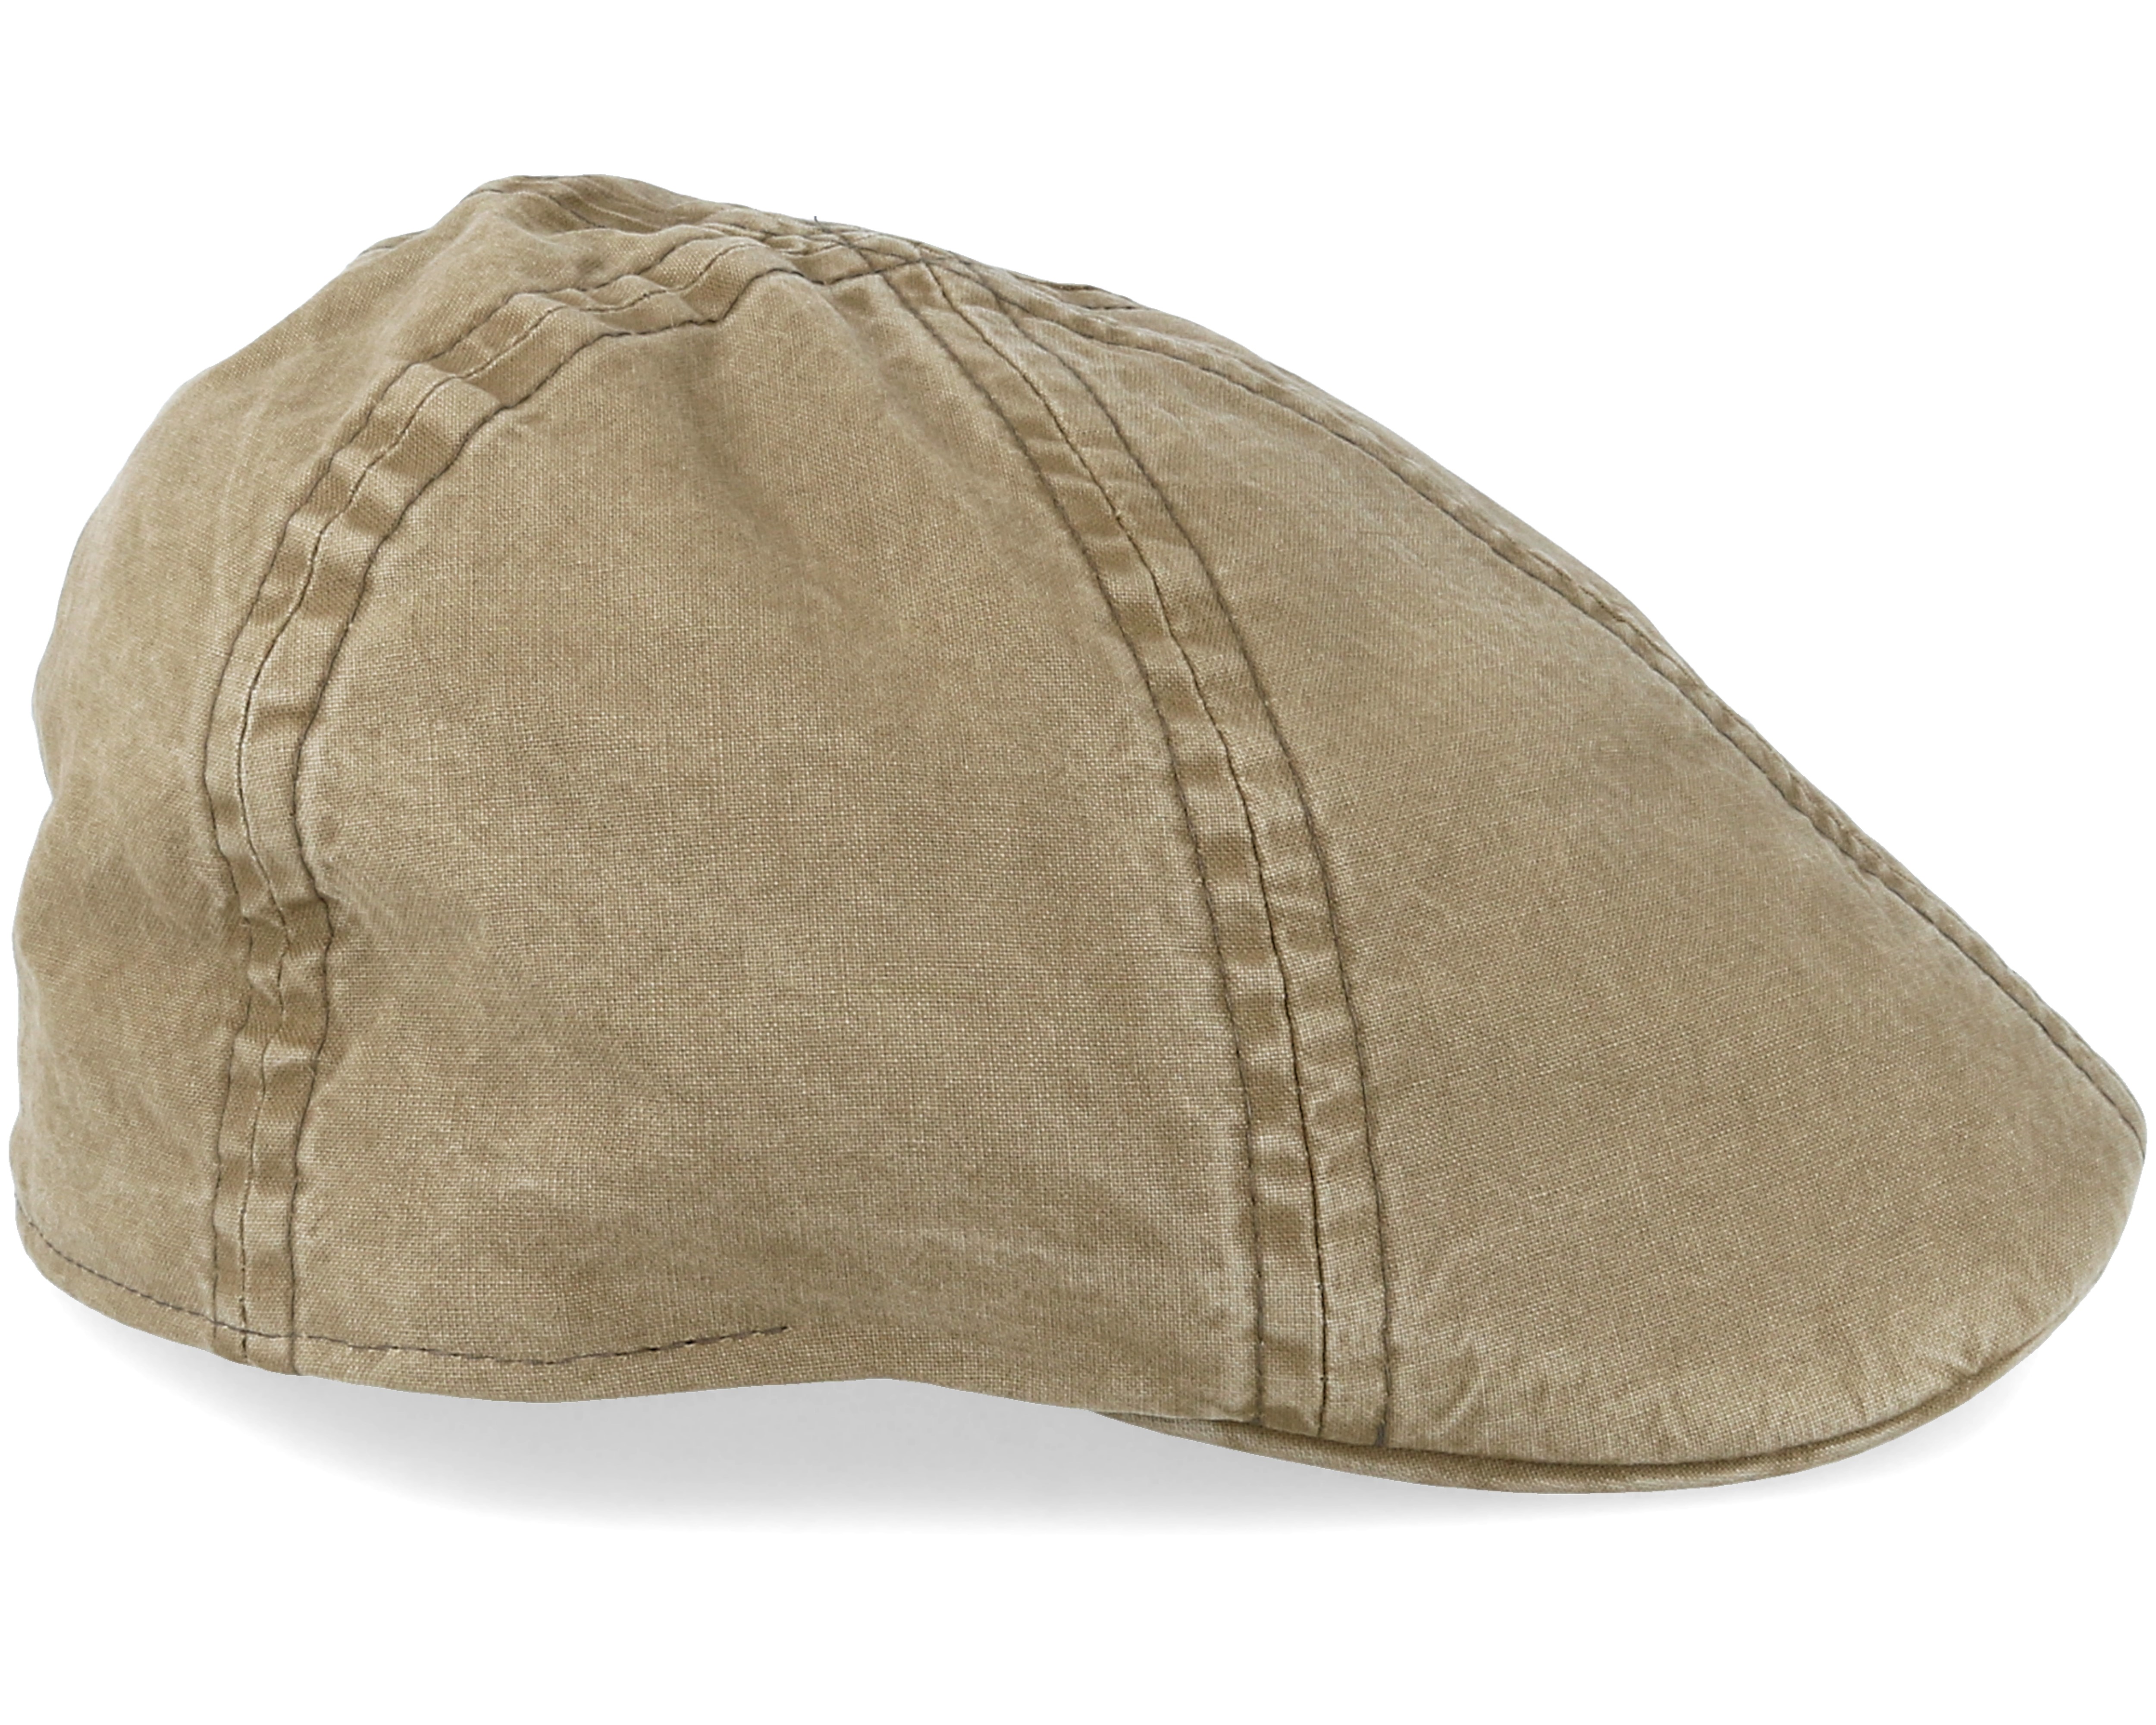 Cotton flat cap